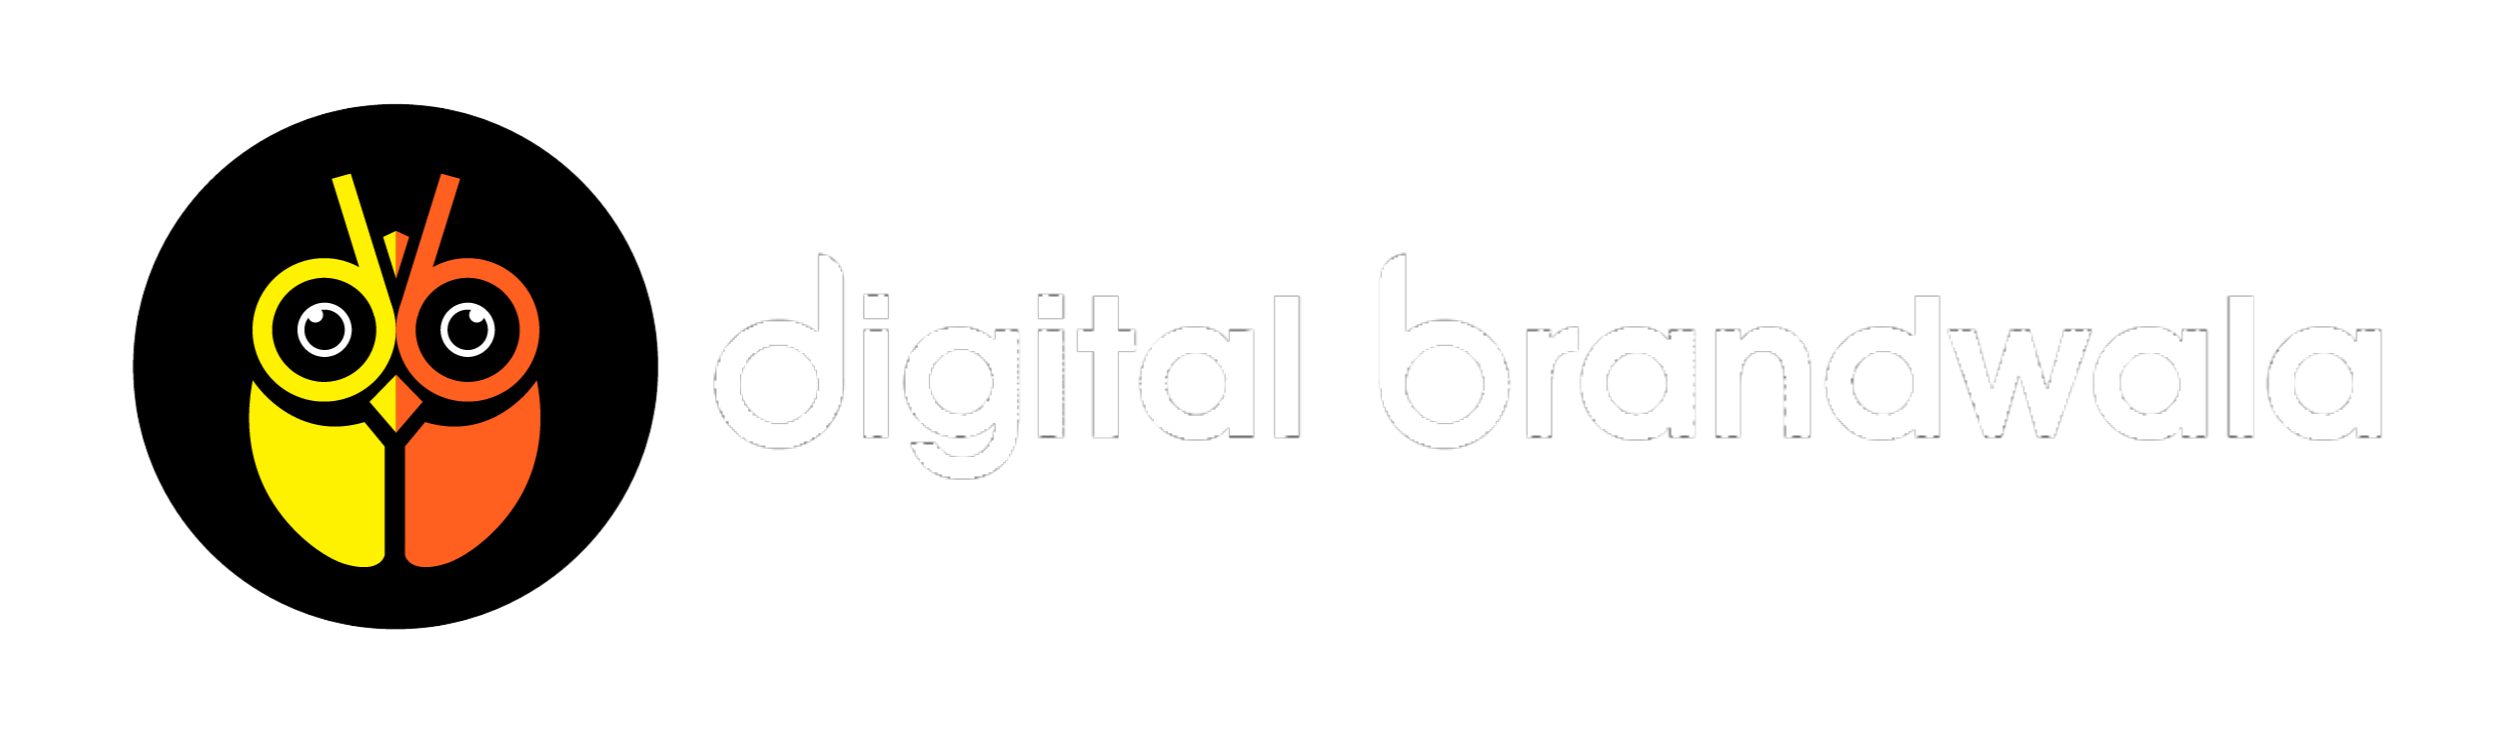 Digital brandwala logo new